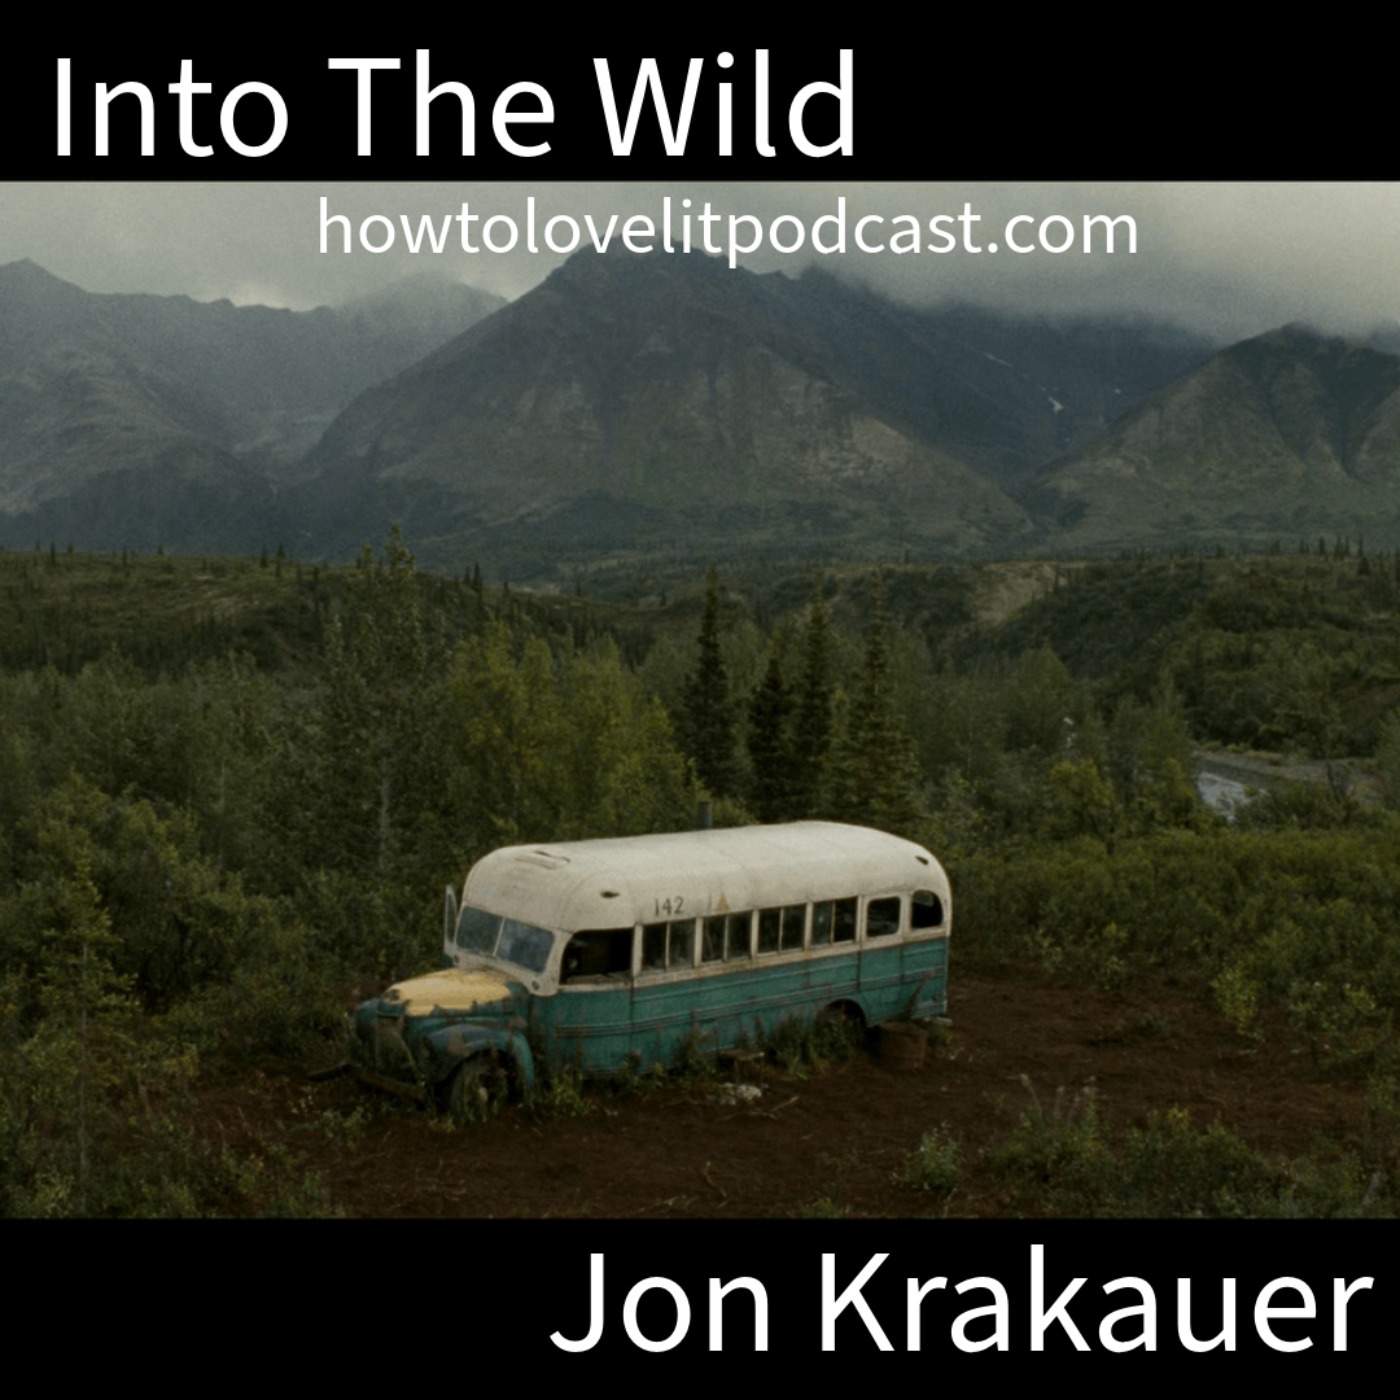 Into The Wild - Jon Krakauer - Episode 1 - The Creation Of A 